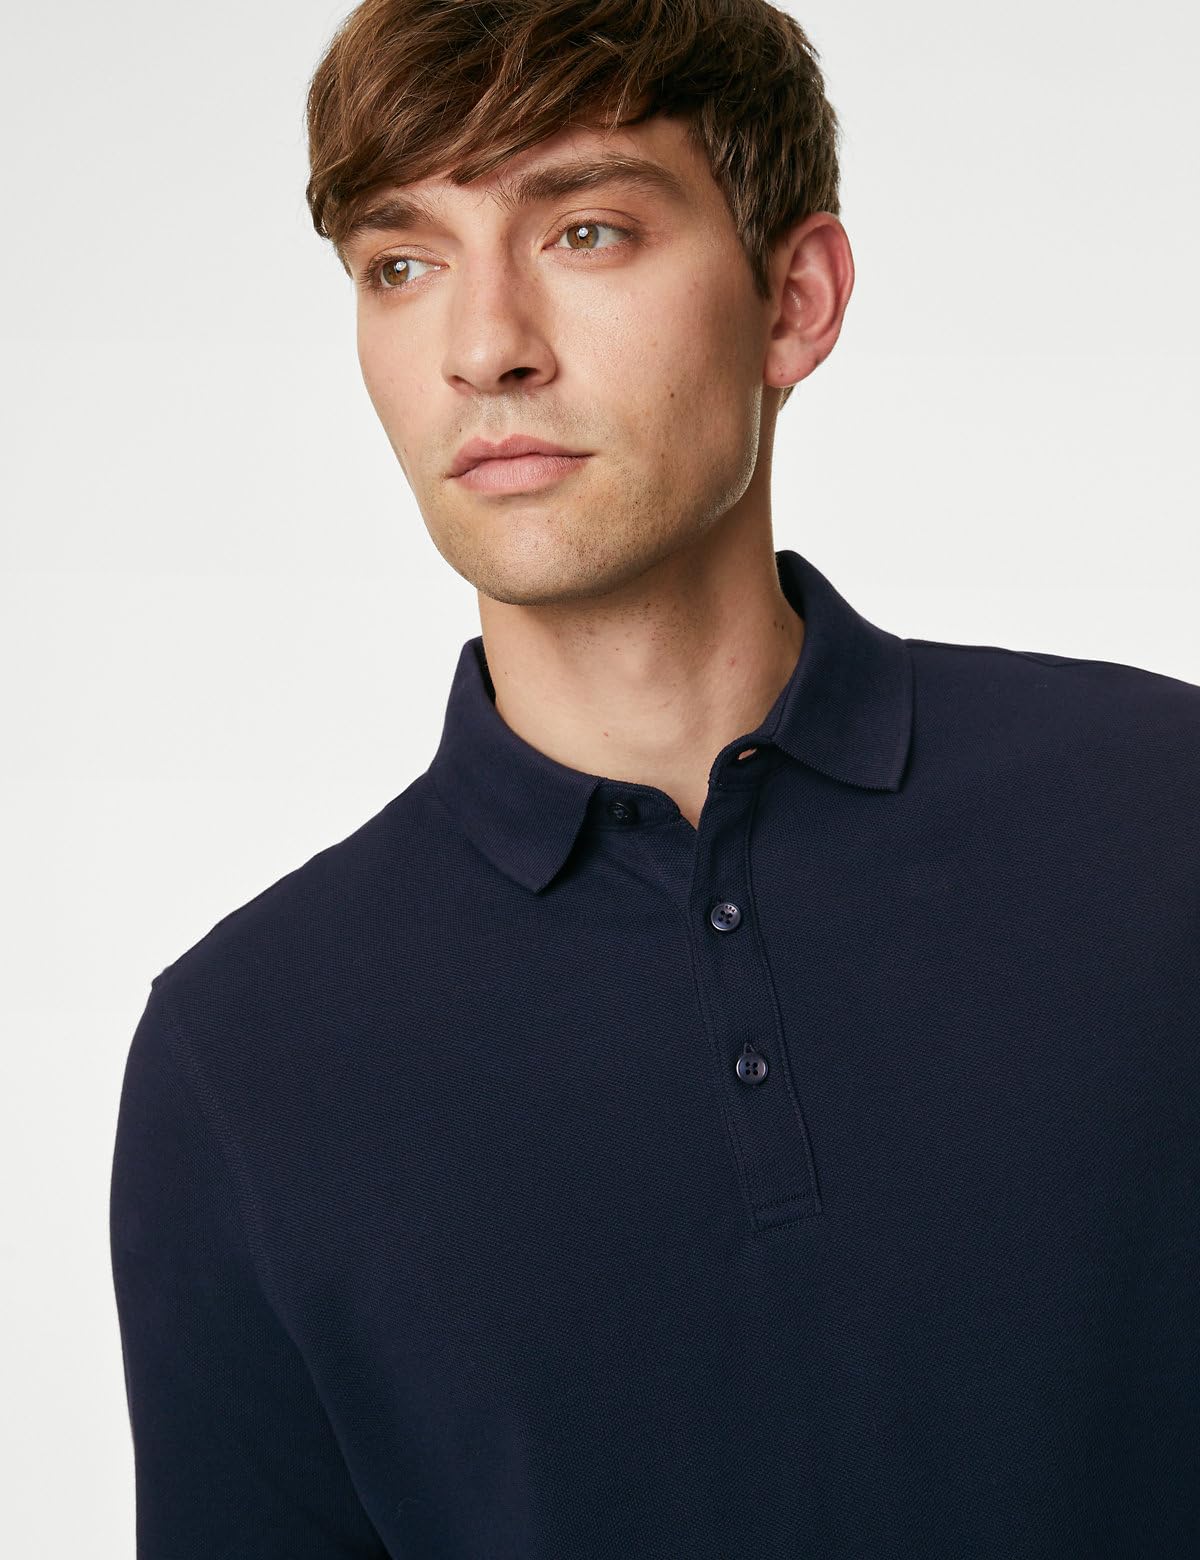 Marks & Spencer Pure Cotton Long Sleeve Polo Shirt T285525MDARK Navy_(XL)